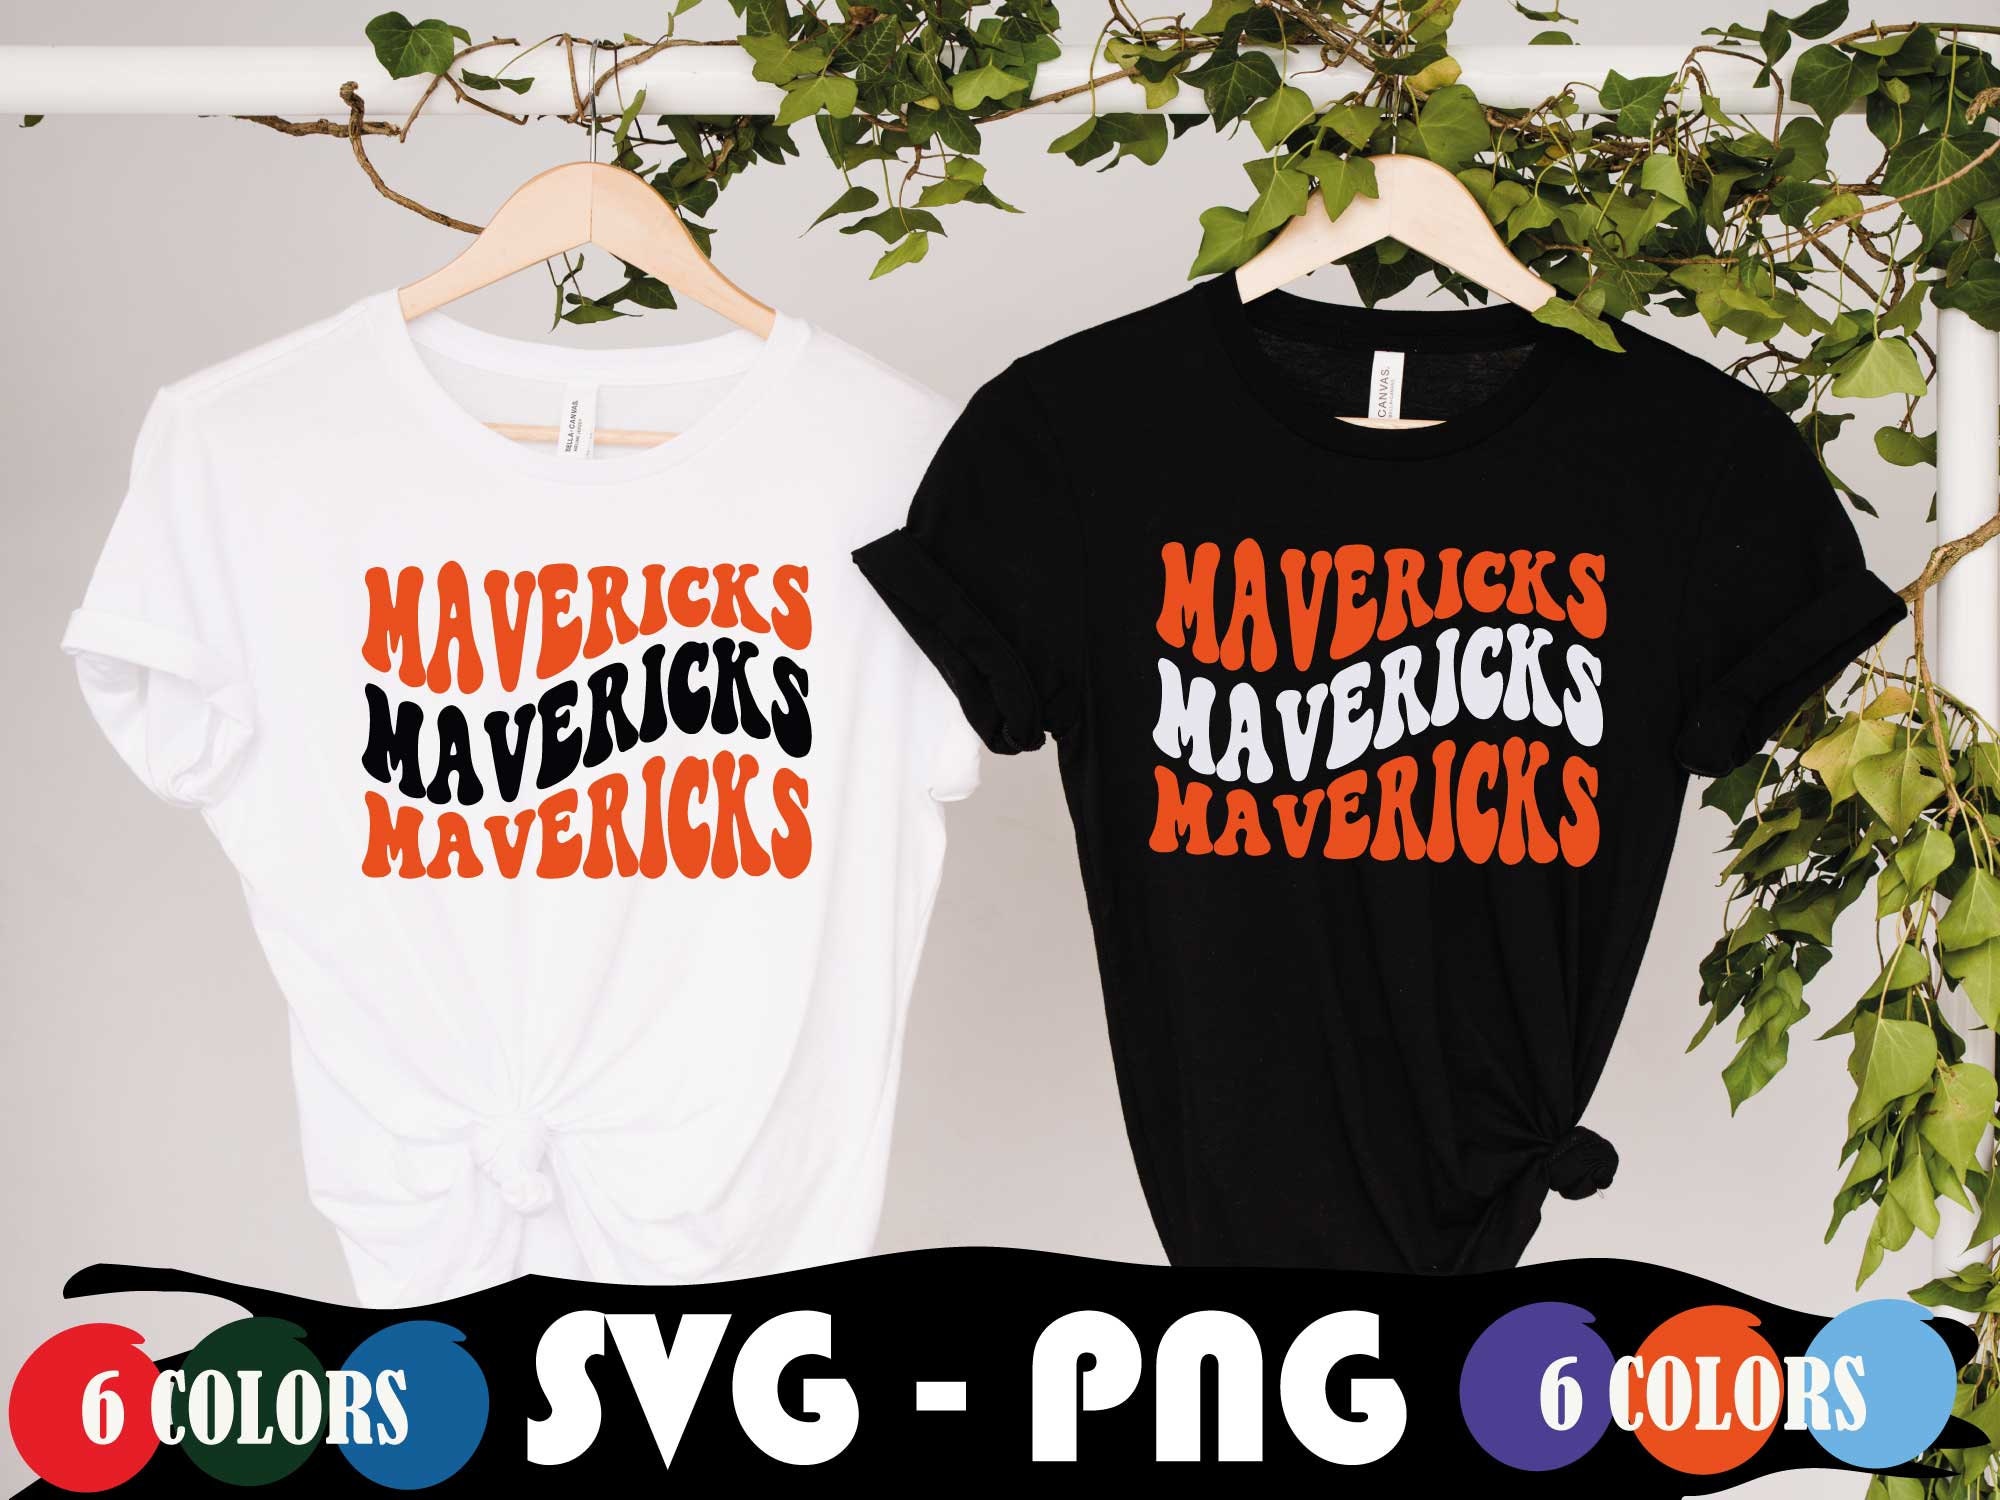 Dallas Mavericks Nba X Spongebob Collab T-Shirt, Tshirt, Hoodie,  Sweatshirt, Long Sleeve, Youth, Personalized shirt, funny shirts, gift  shirts » Cool Gifts for You - Mfamilygift